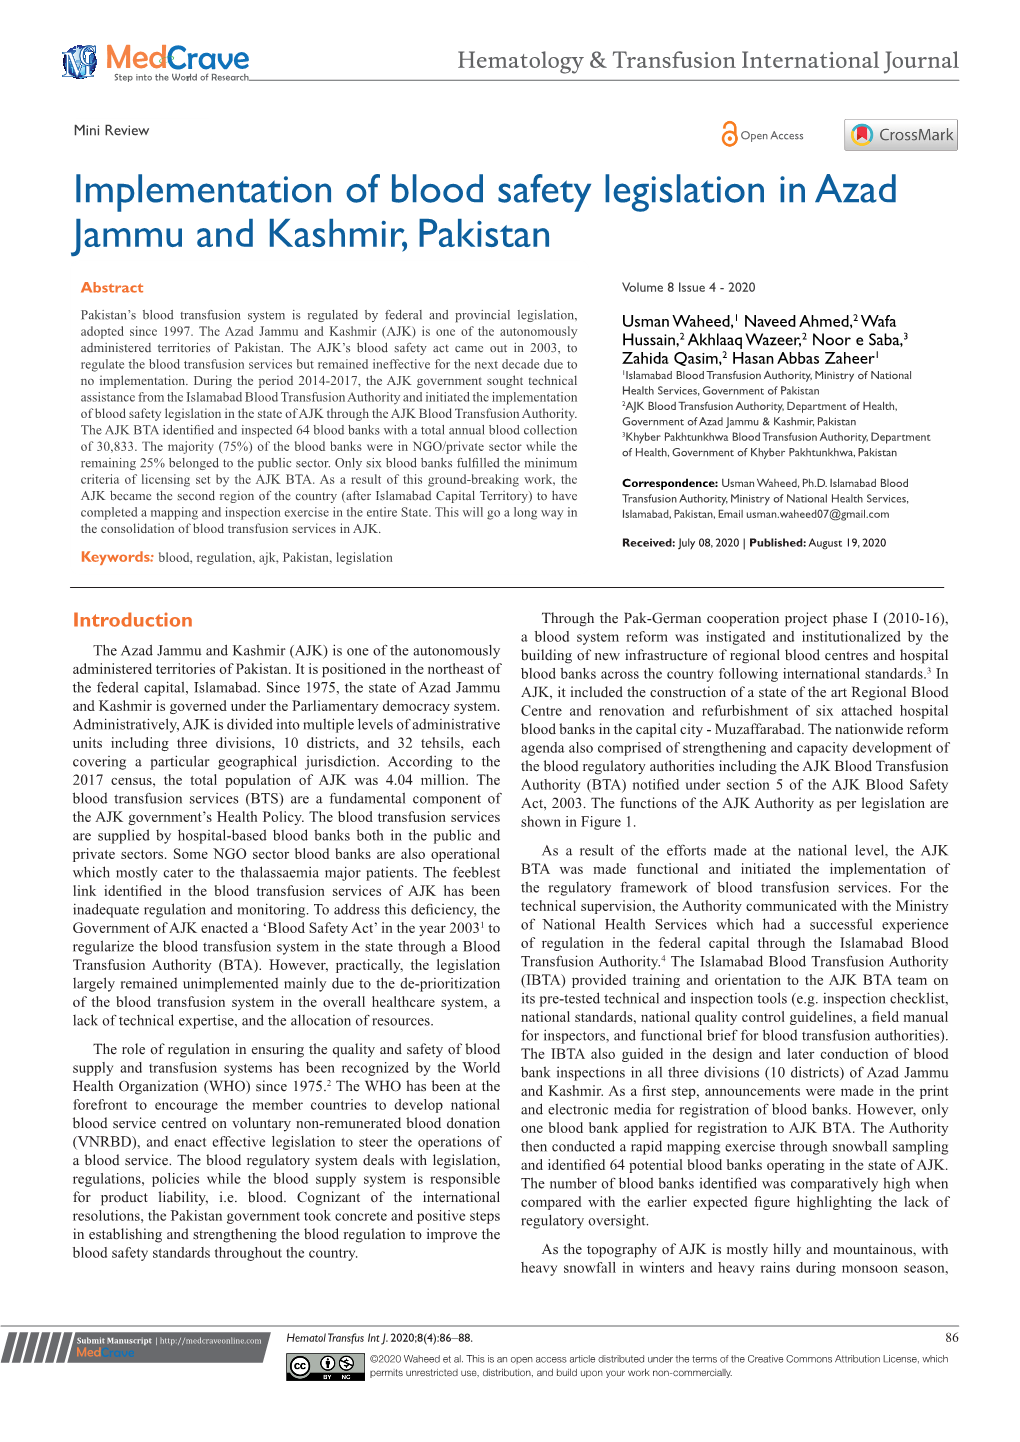 Implementation of Blood Safety Legislation in Azad Jammu and Kashmir, Pakistan